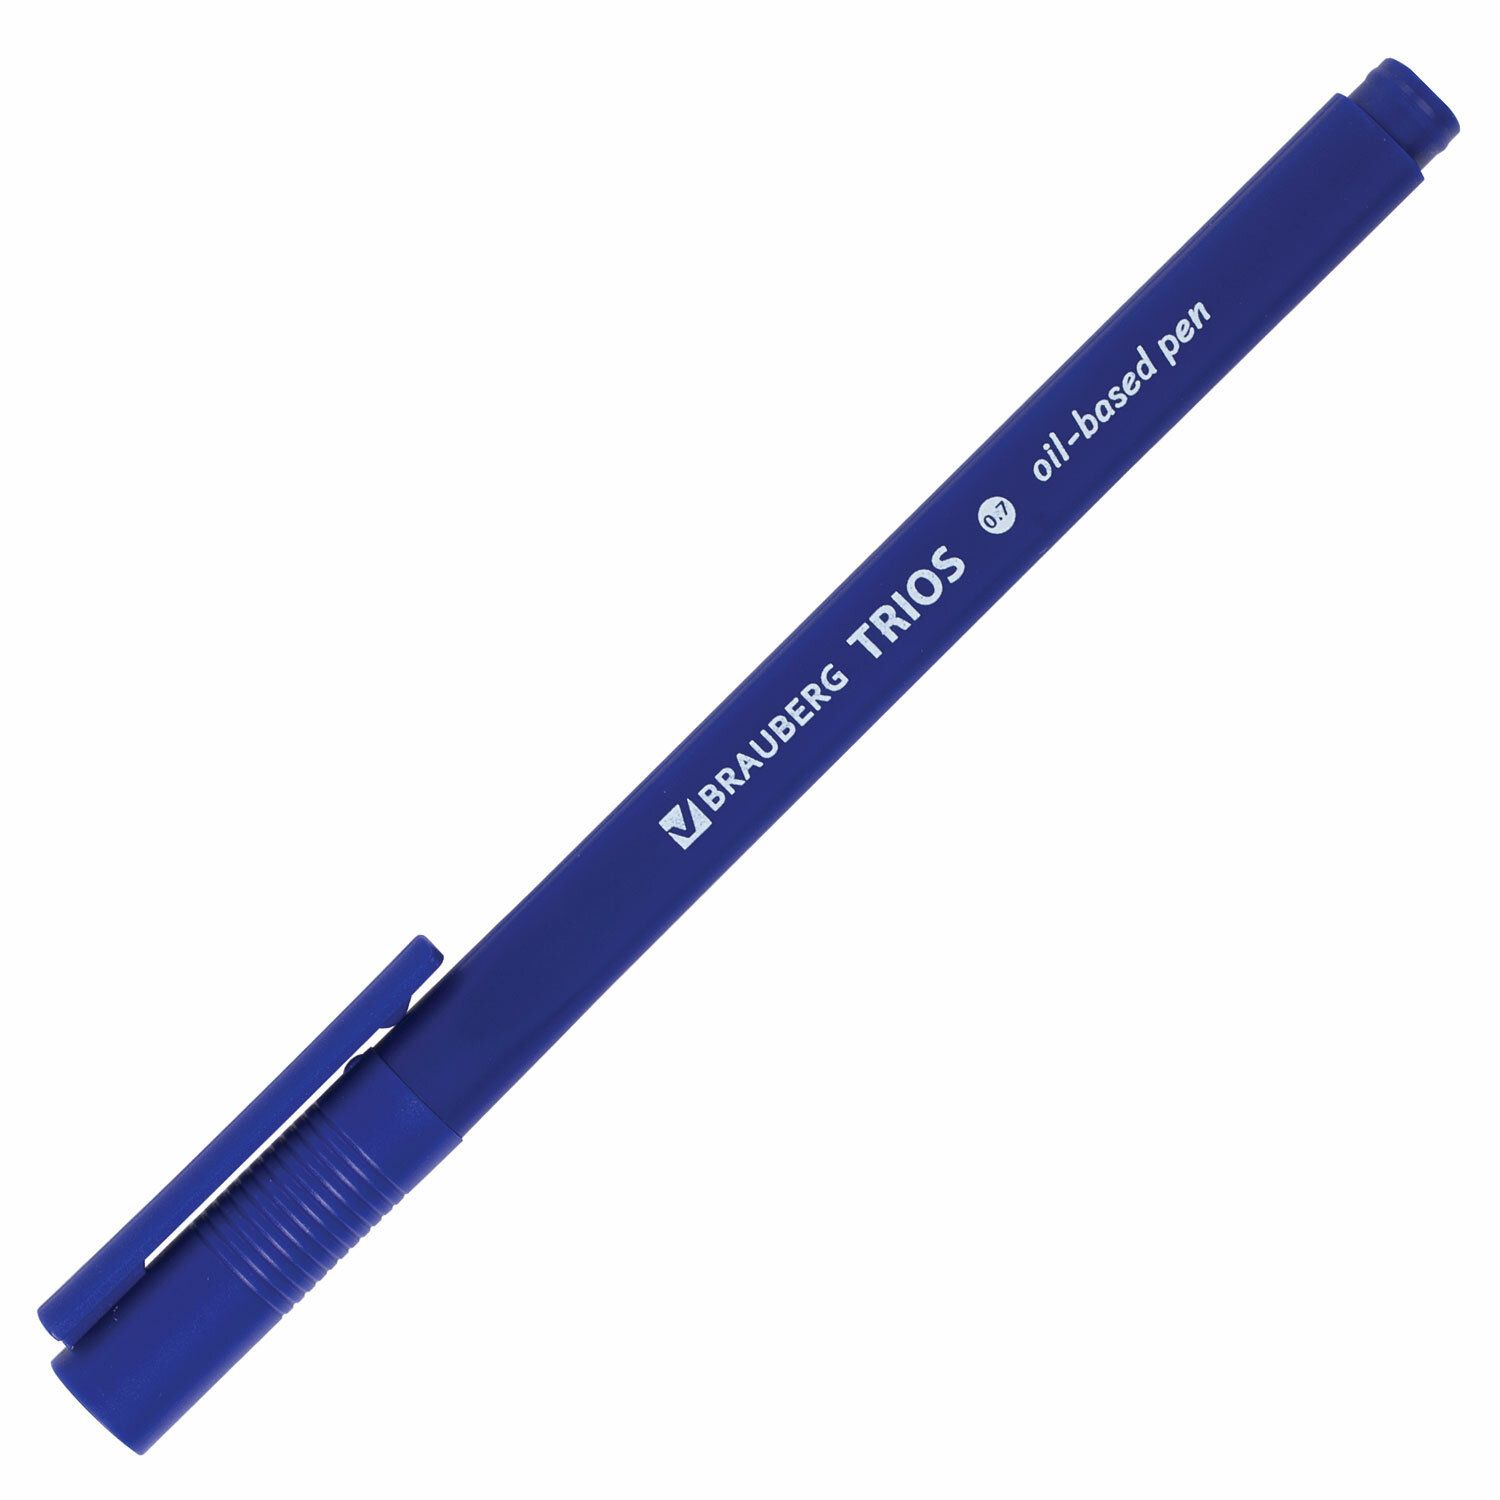 Brauberg 0.7. Ручка БРАУБЕРГ 0.7 трехгранная. Ручка BRAUBERG 0.7. Ручка БРАУБЕРГ шариковая синий корпус. Ручки БРАУБЕРГ 0.7 мм.